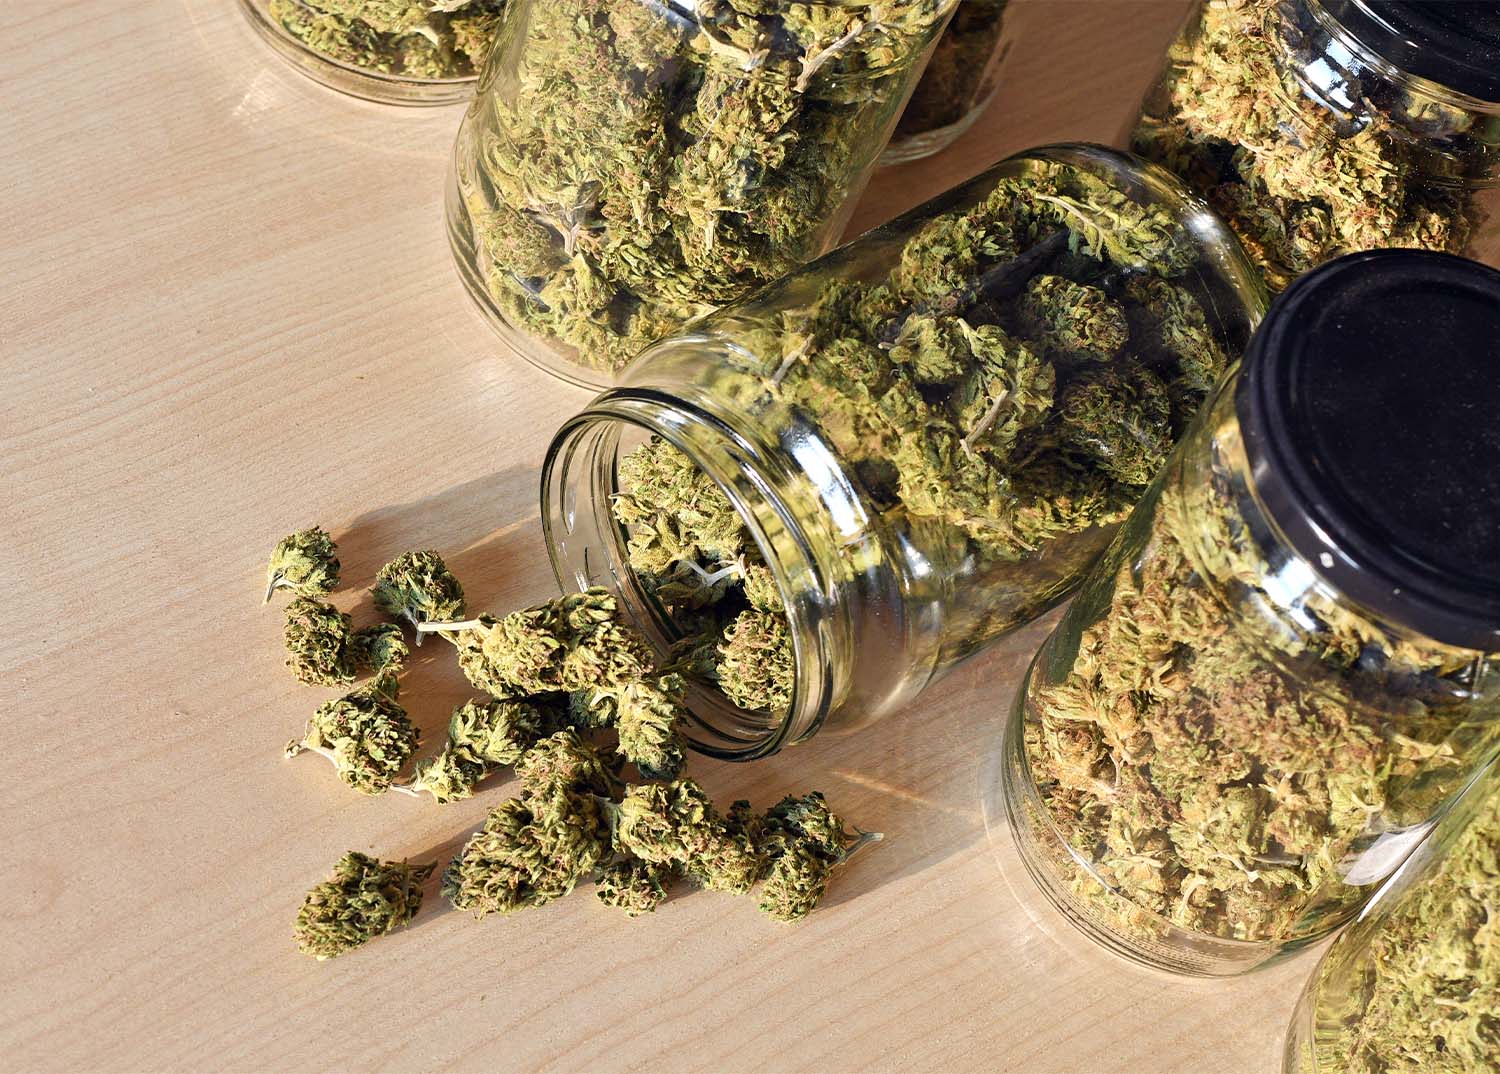 Dried cannabis buds in jars